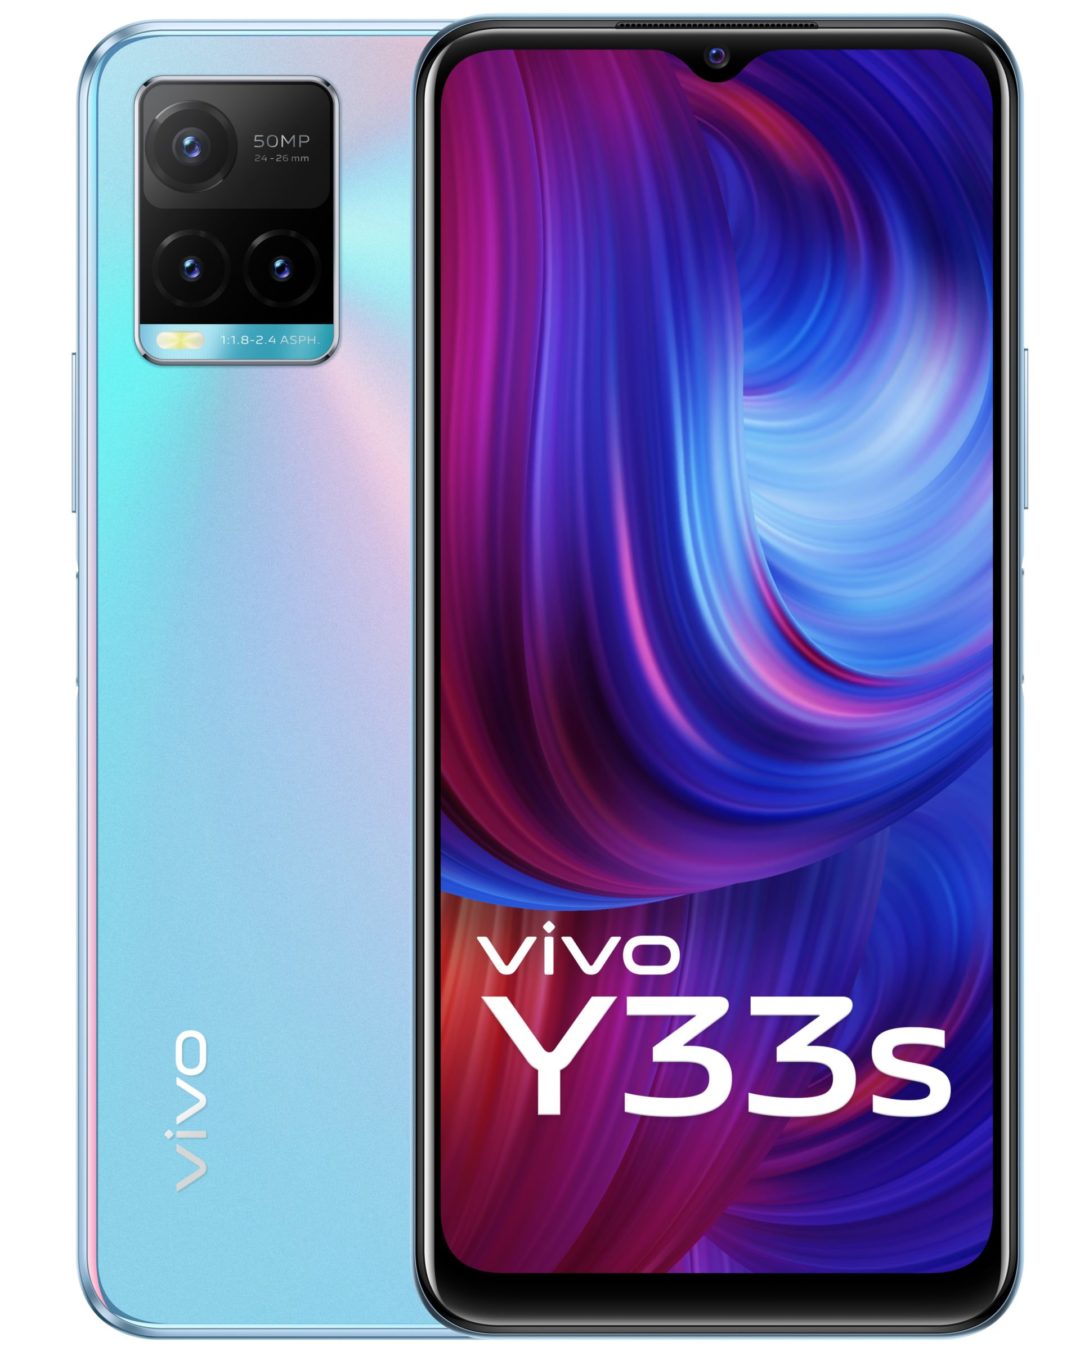 Vivo launches Y33s